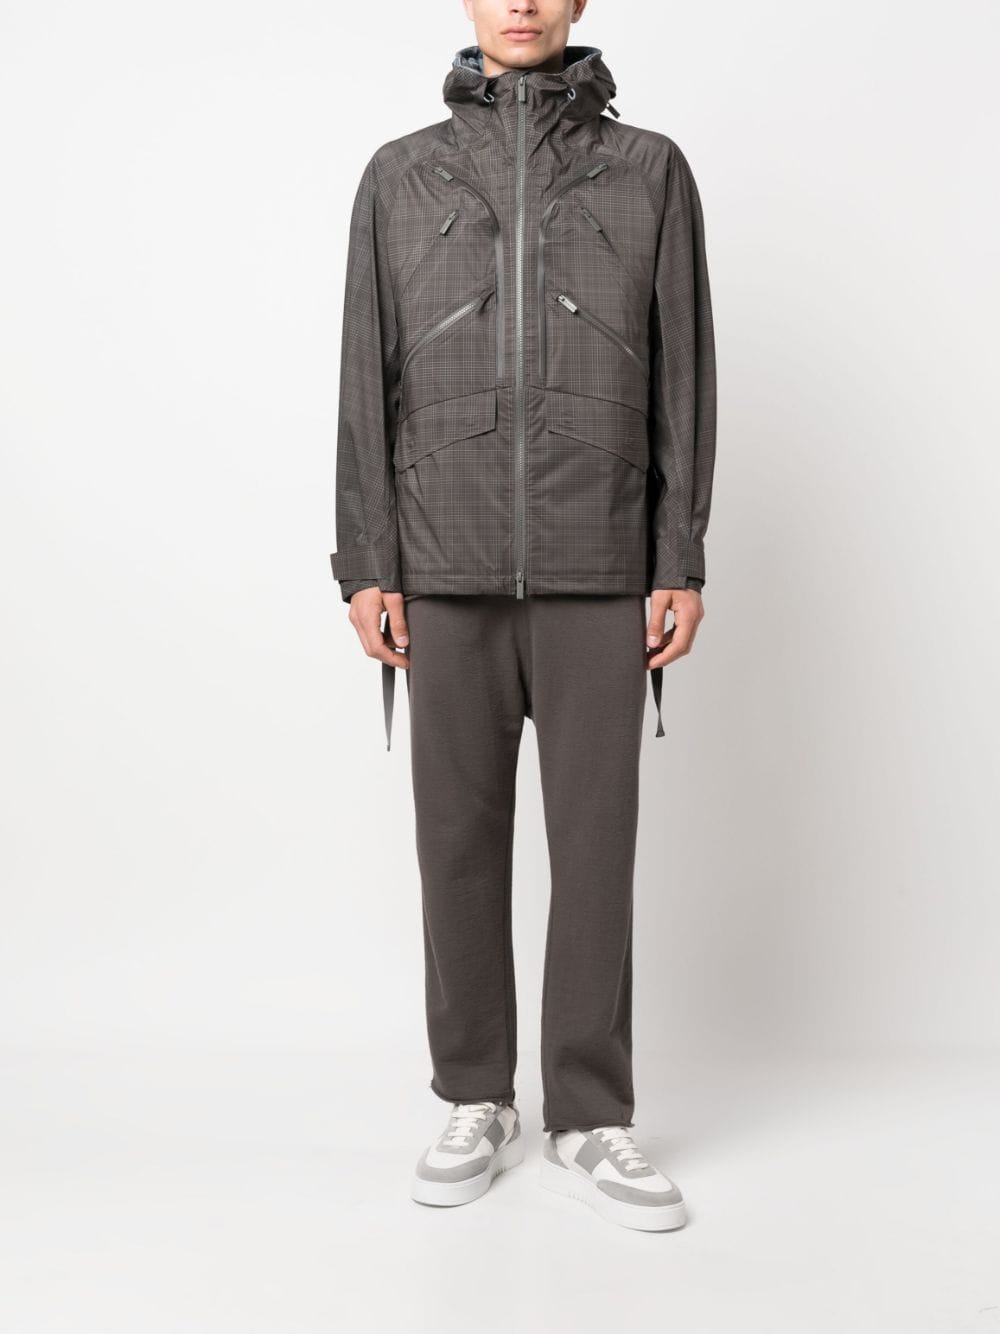 White Mountaineering check-pattern zip-up jacket - Bruin